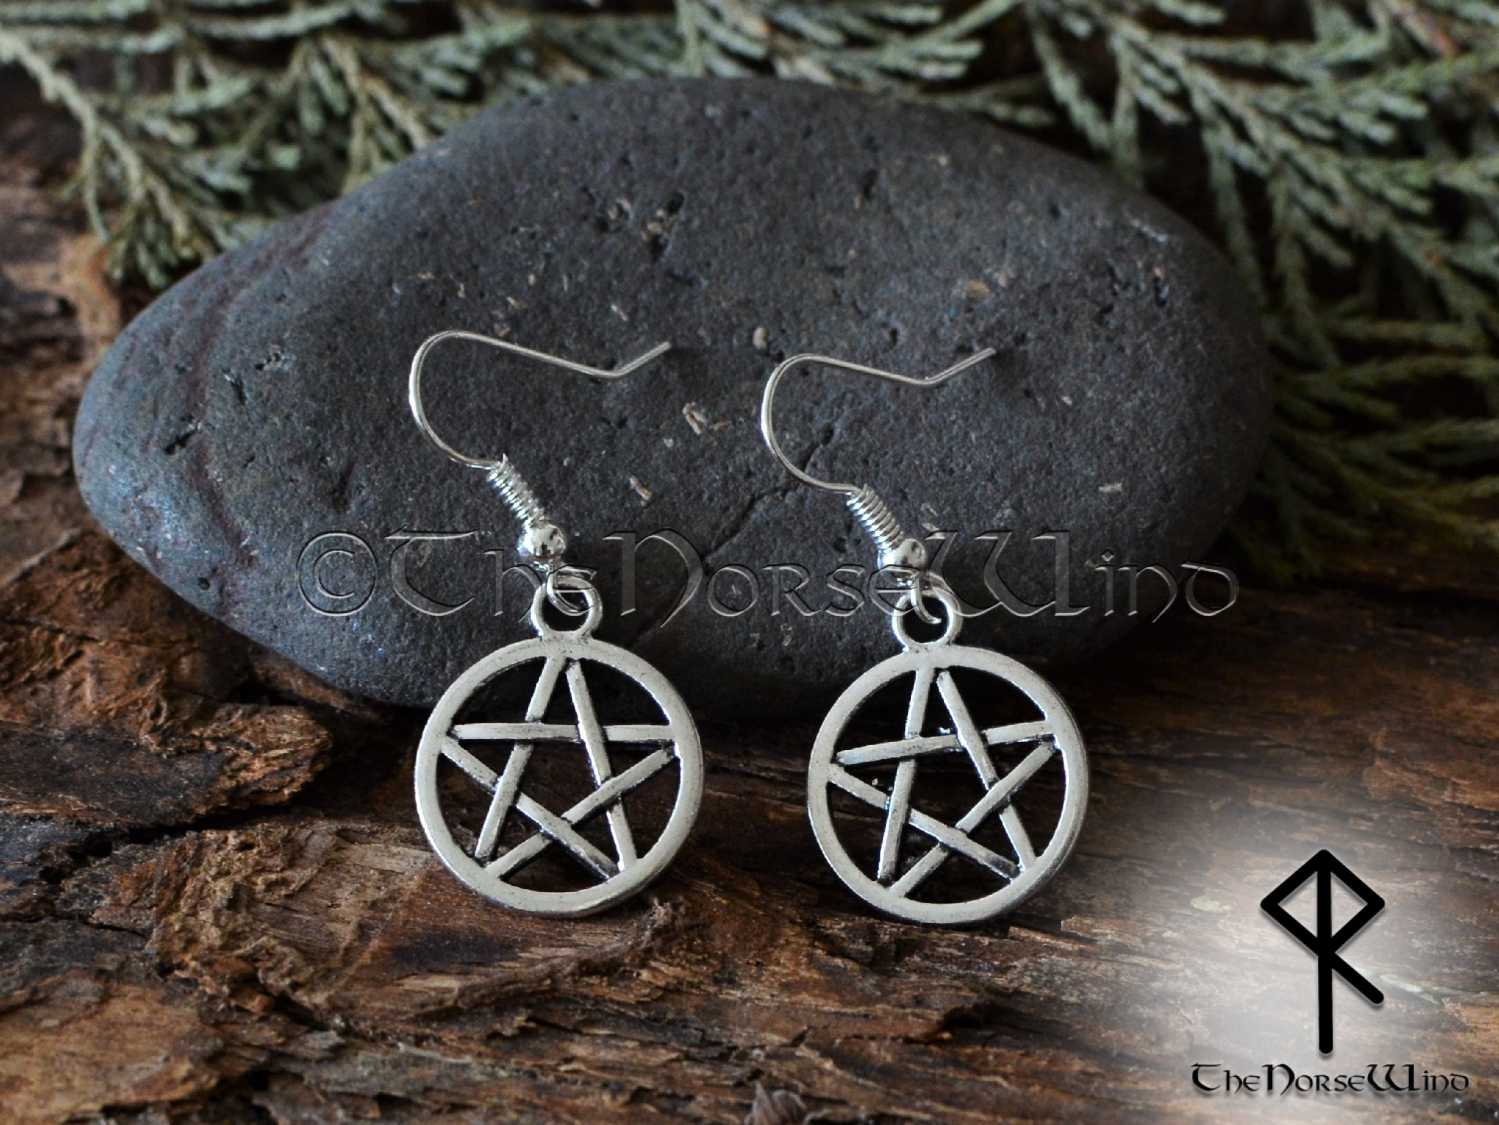 Pentagram Earrings, Witches hoop earrings silver Wicca TheNorseWind